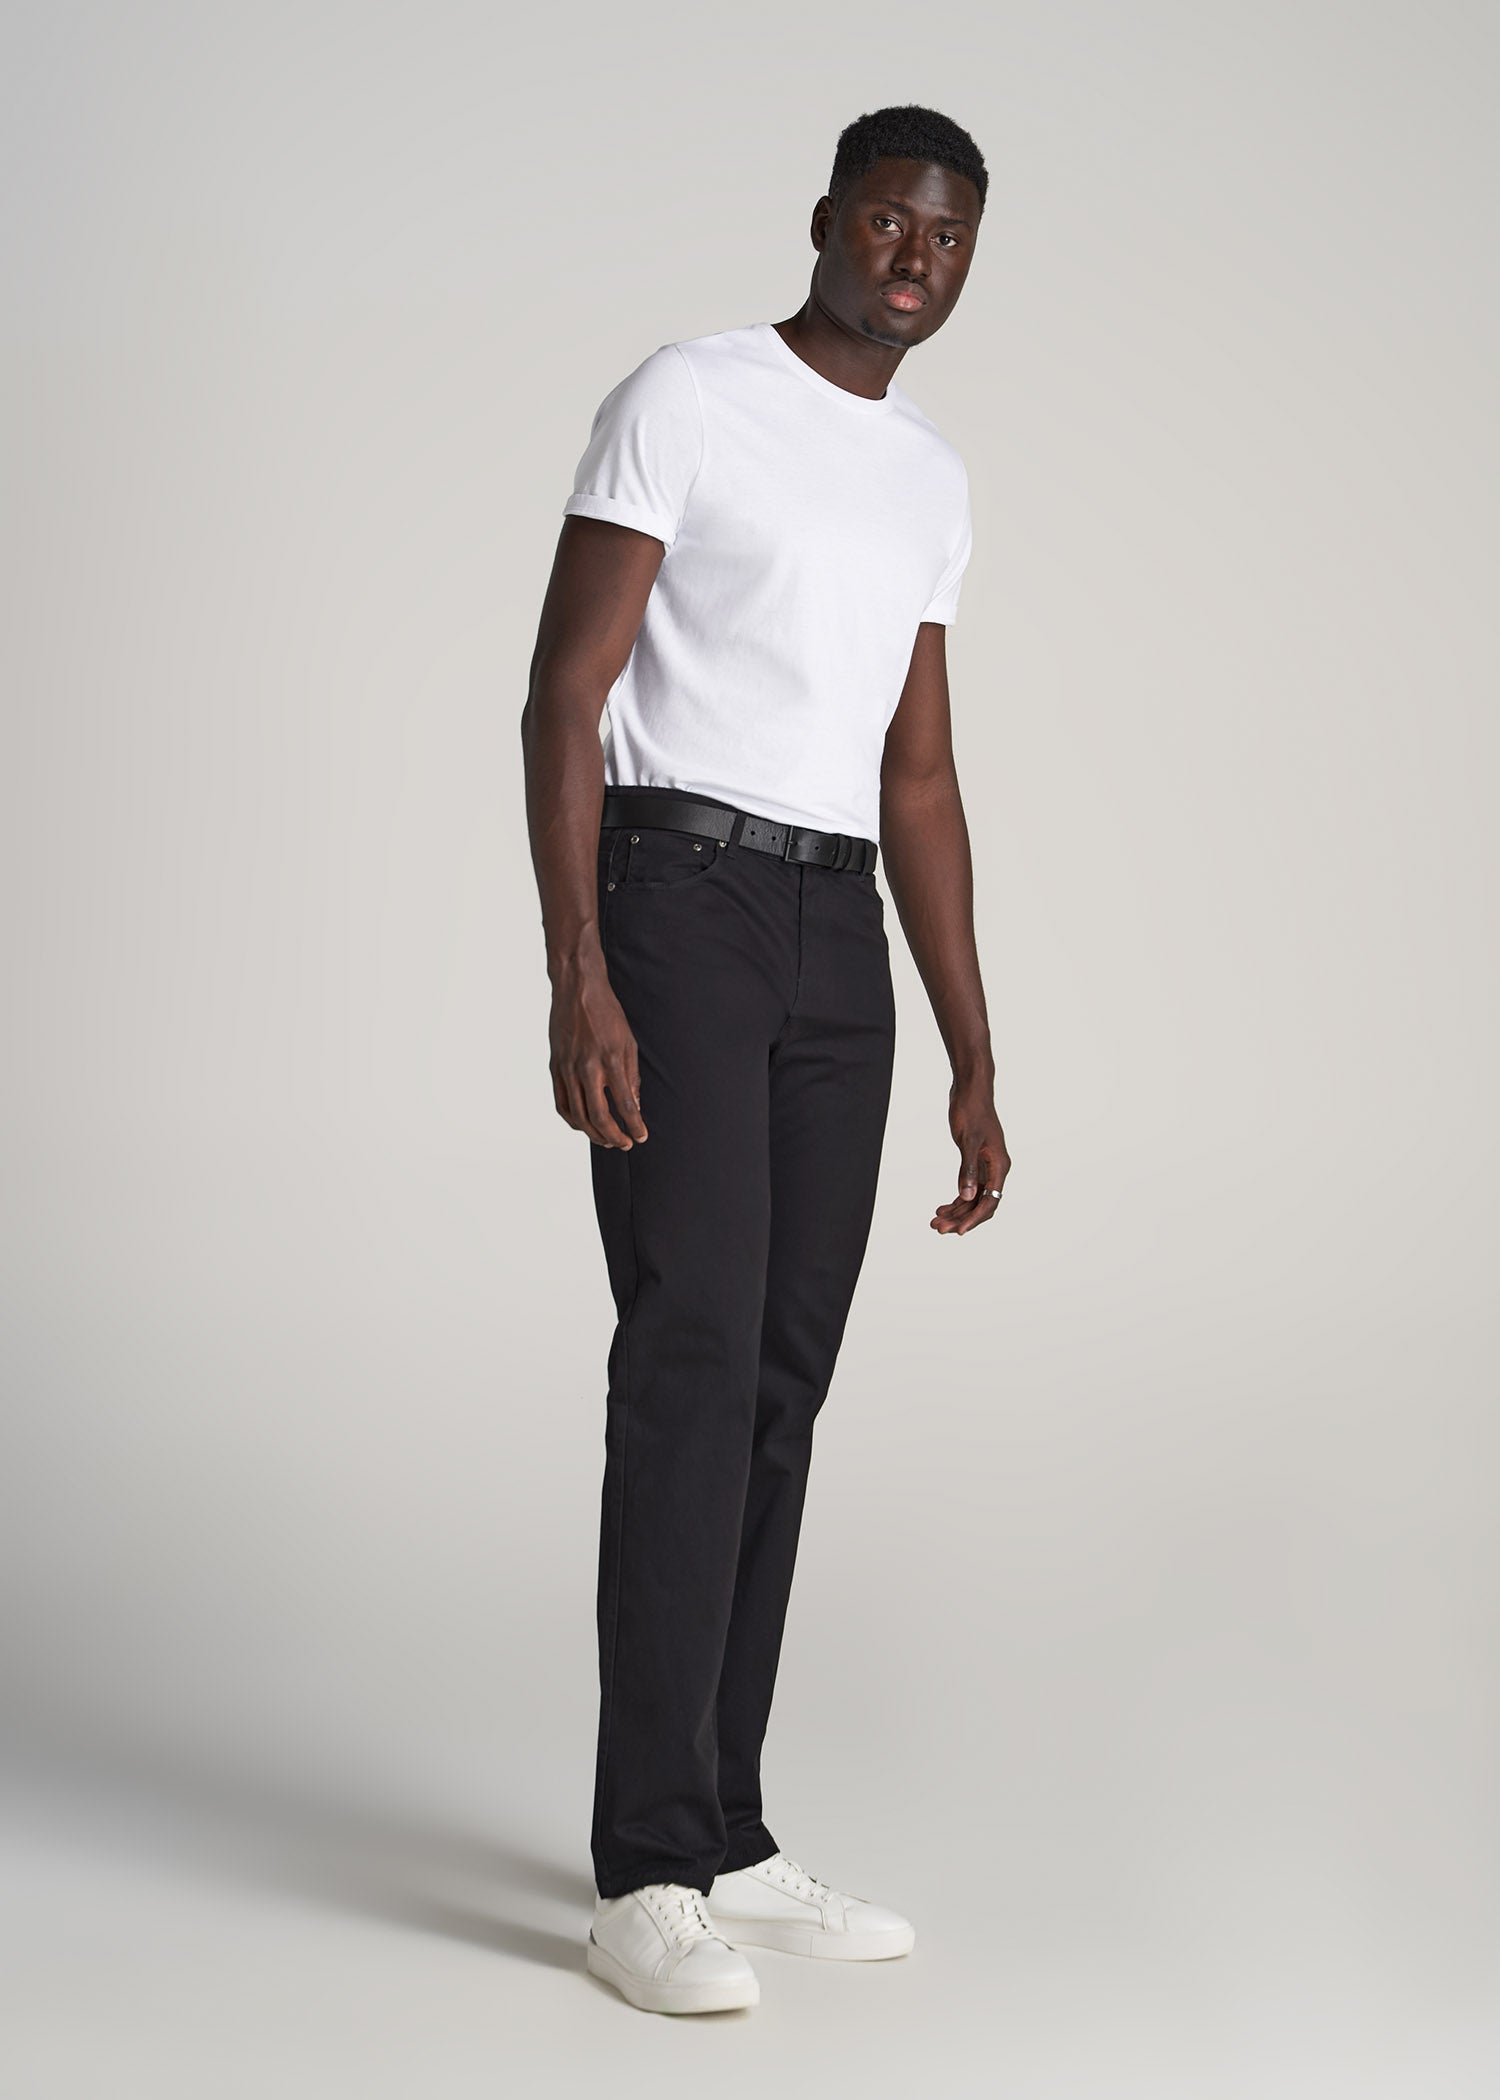 J1 Straight Leg Five-Pocket Pants For Tall Men Black | American Tall